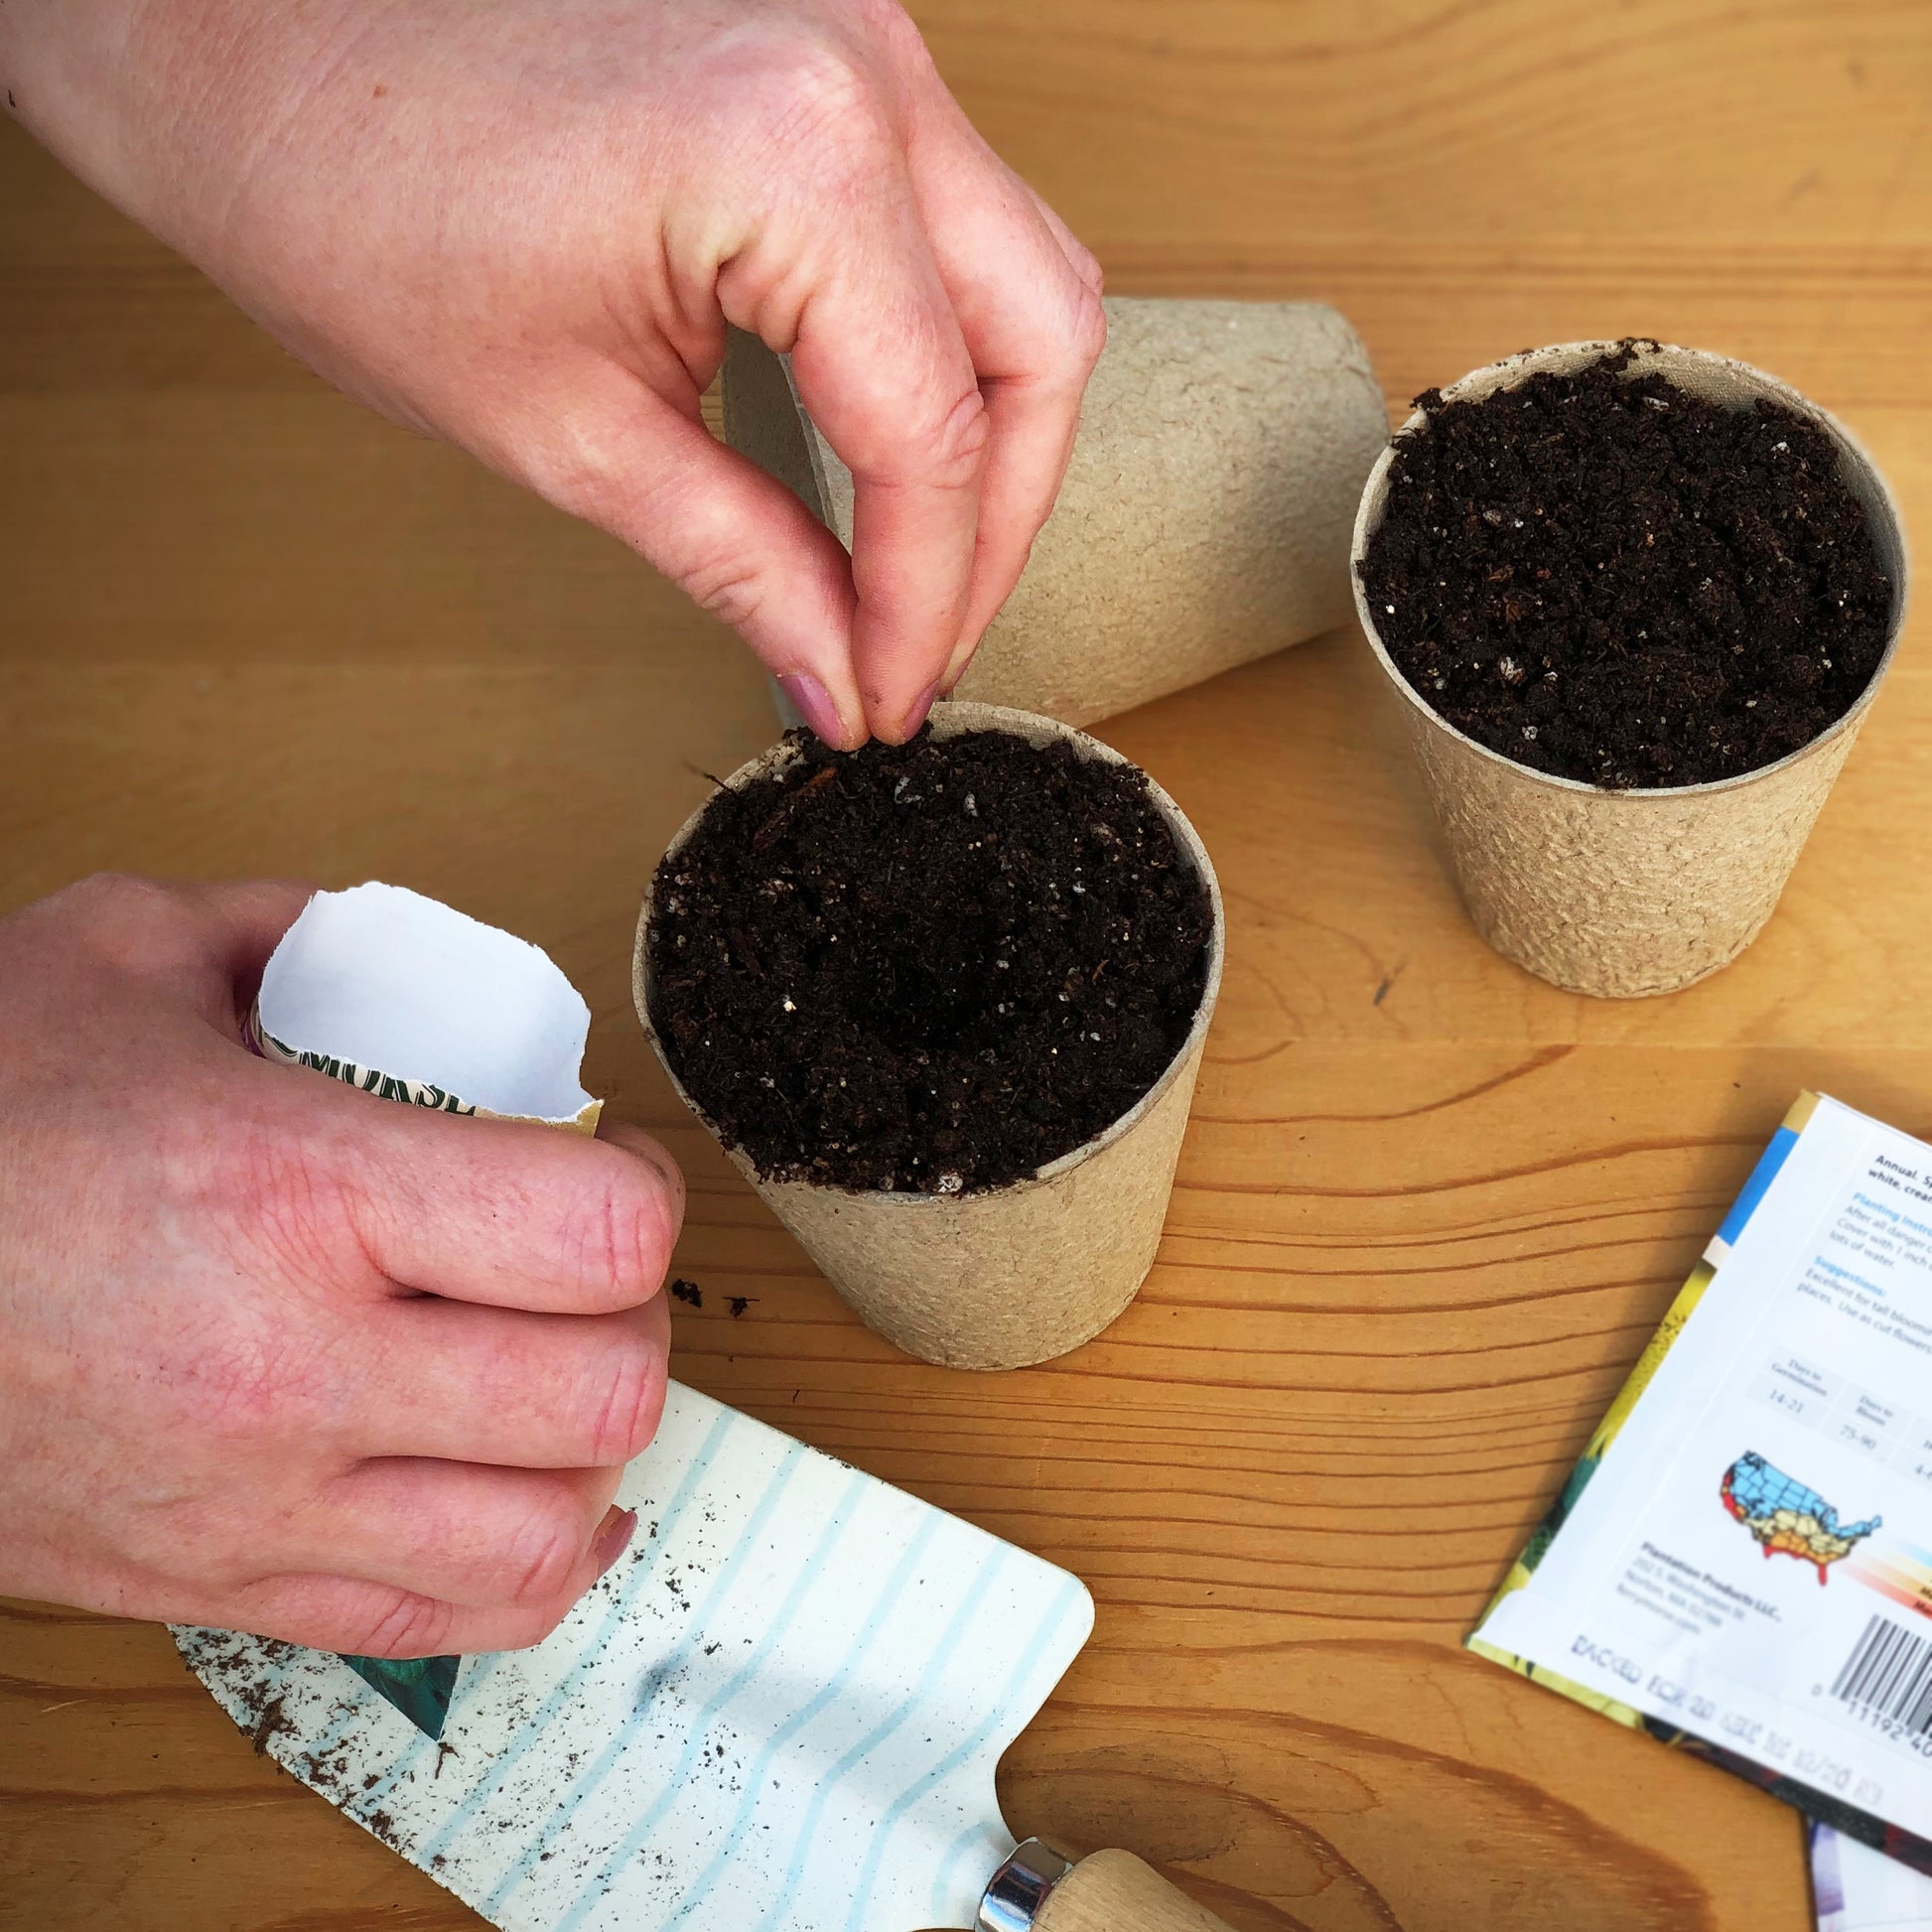 Start Jubilee Watermelon seeds in biodegradable paper or peat pots.